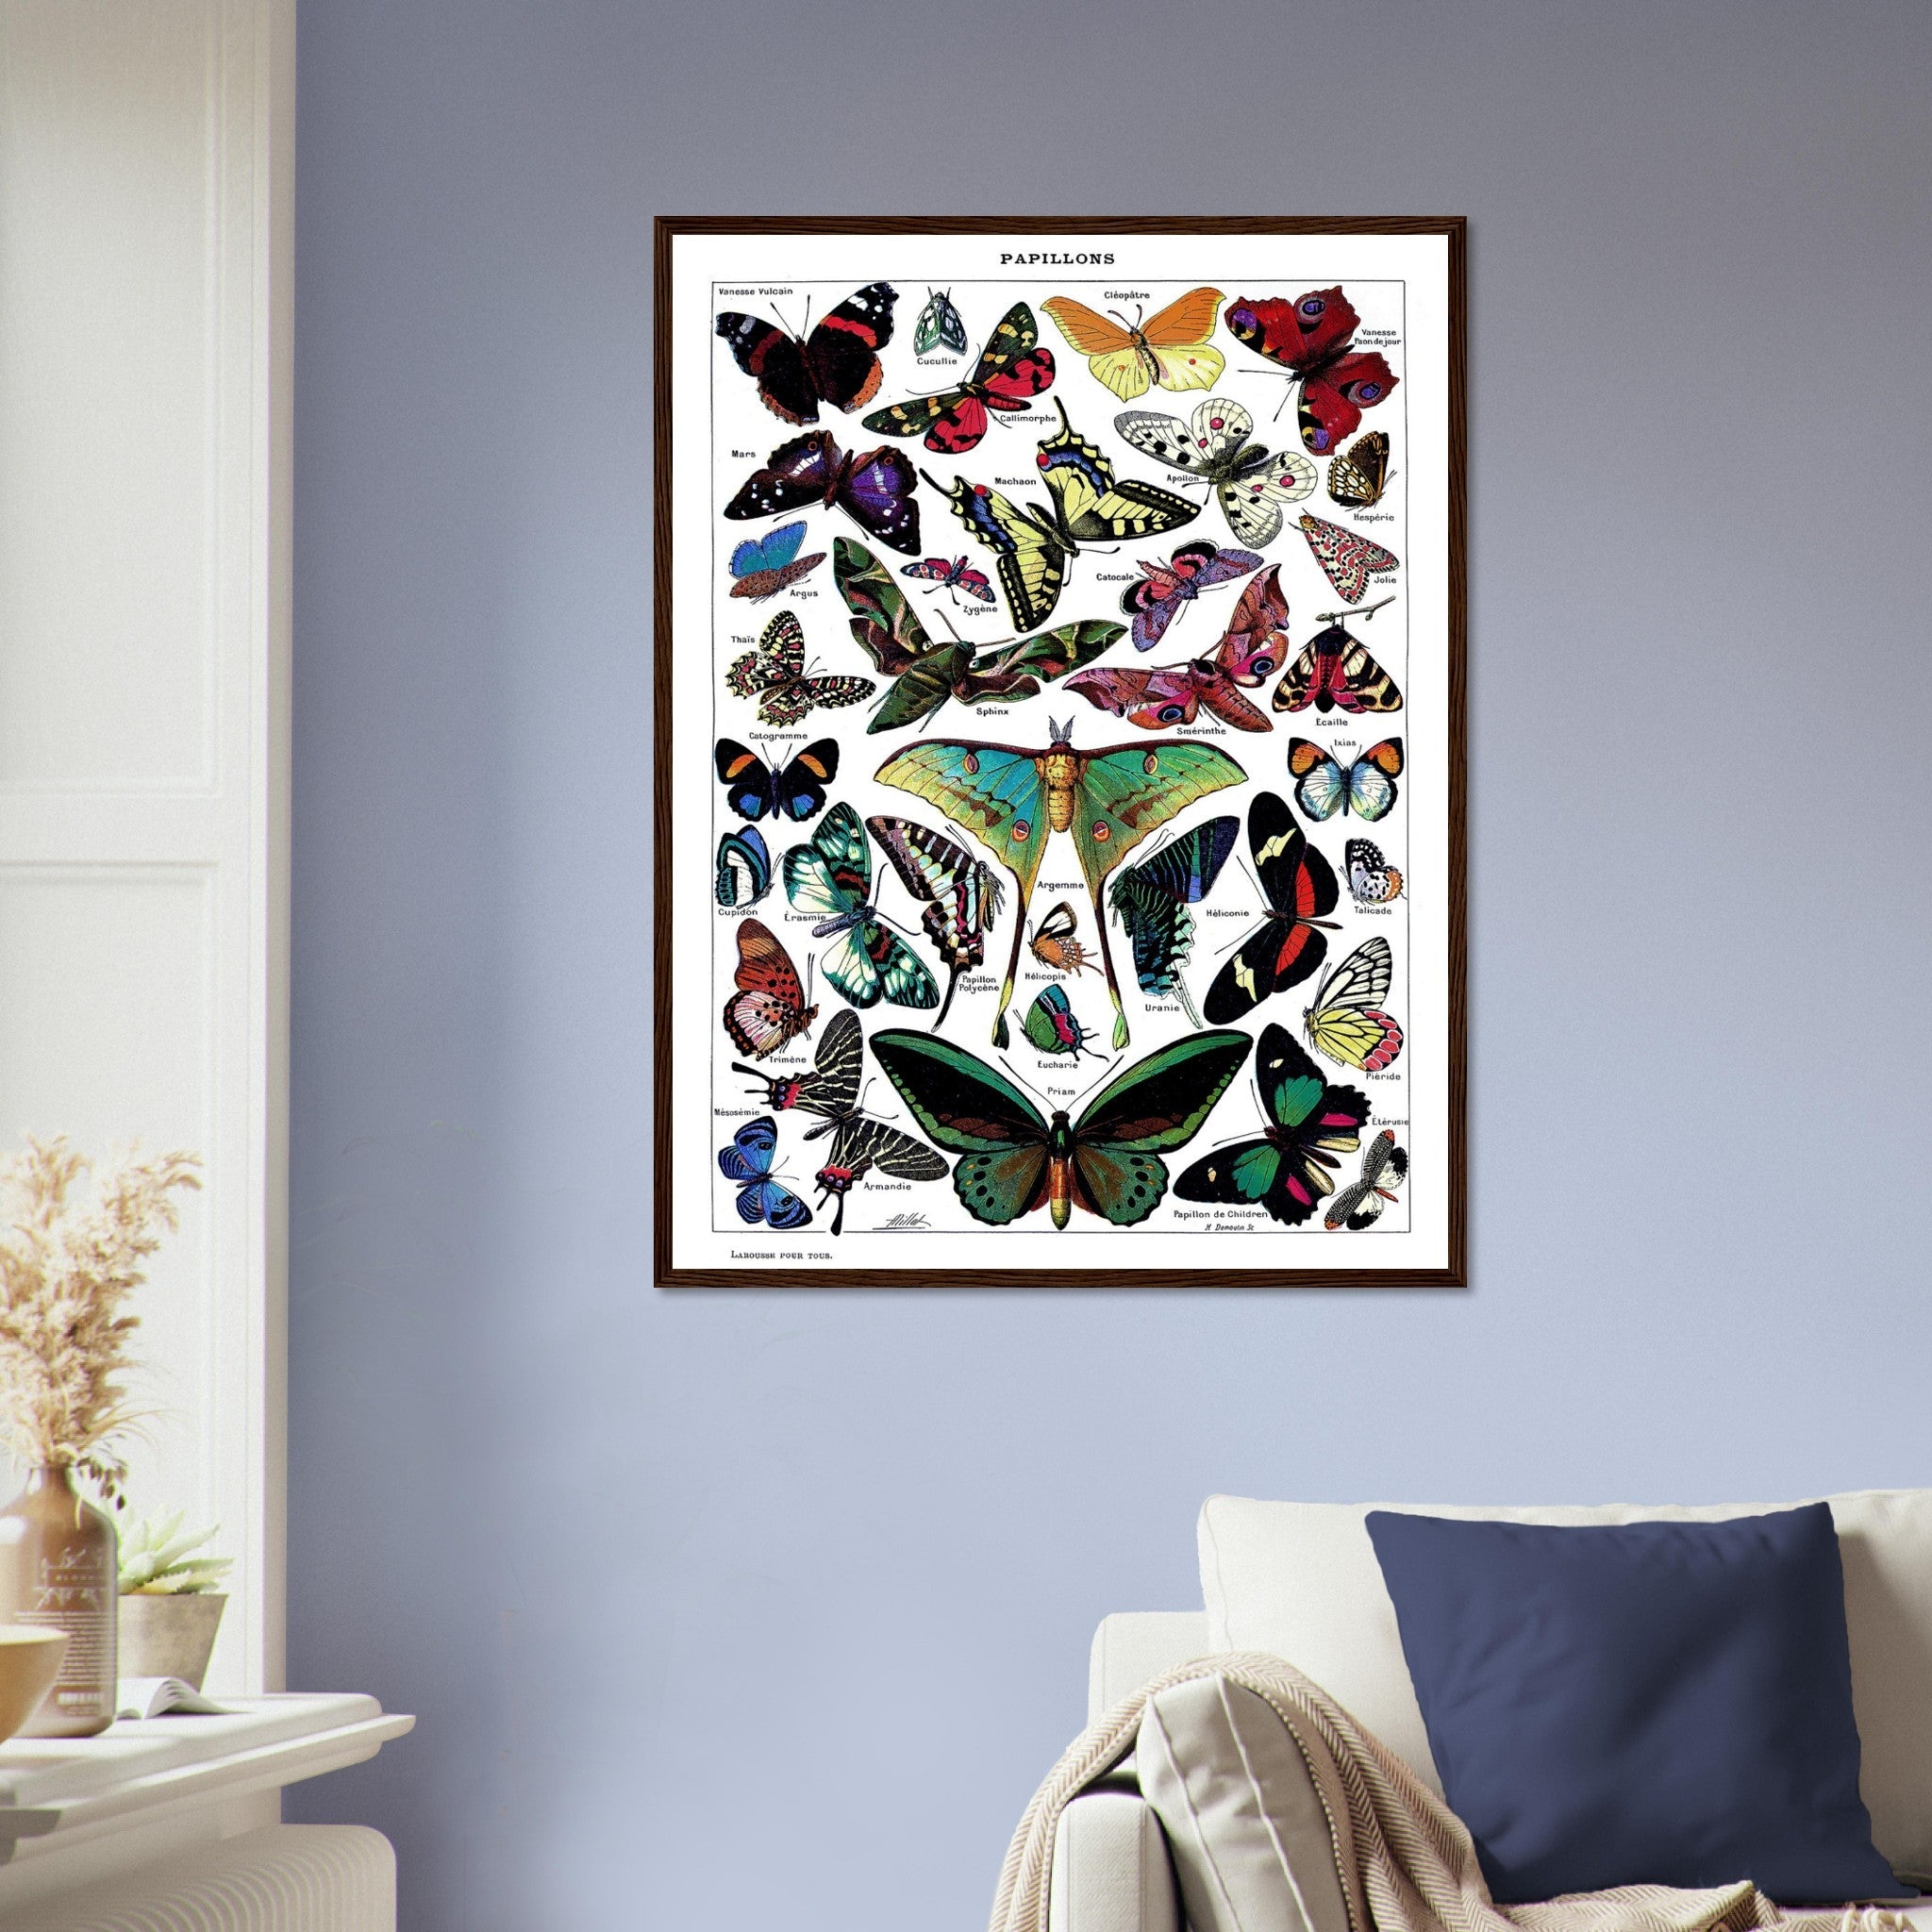 Vintage Butterfly Framed - Adolphe Millot - Papillons (Butterfly) Framed Print UK, EU USA Domestic Shipping - WallArtPrints4U